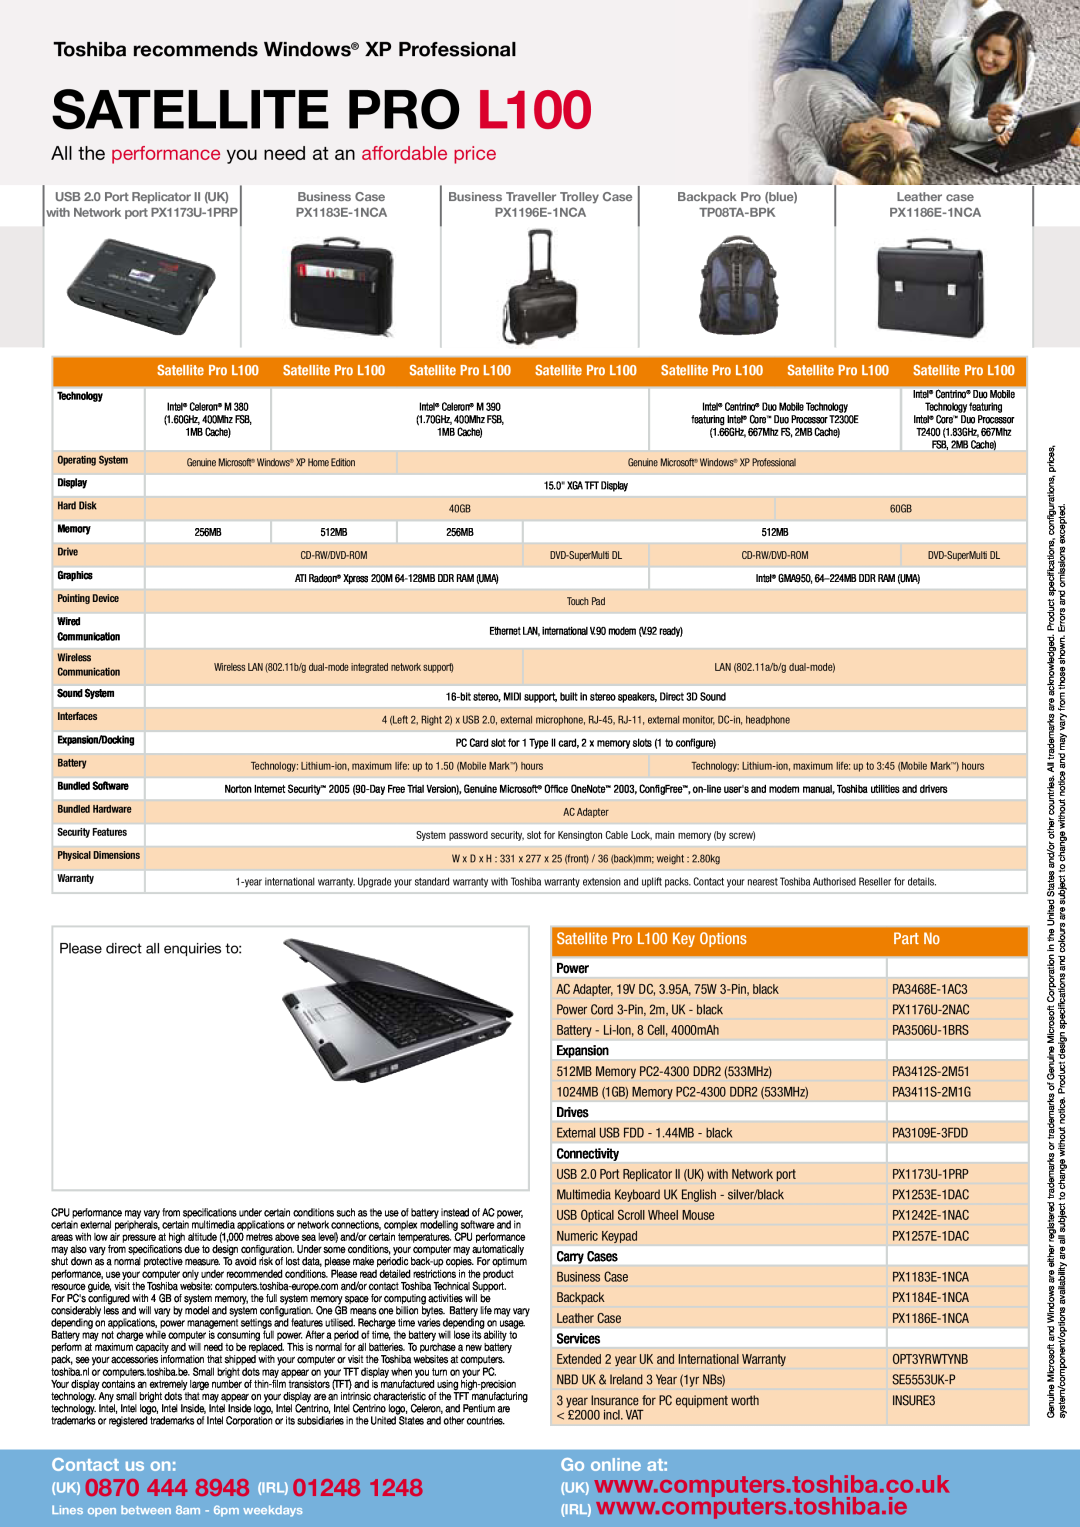 Toshiba manual SATELLITE PRO L100, UK 0870 444 8948 IRL, Toshiba recommends Windows XP Professional, Contact us on 